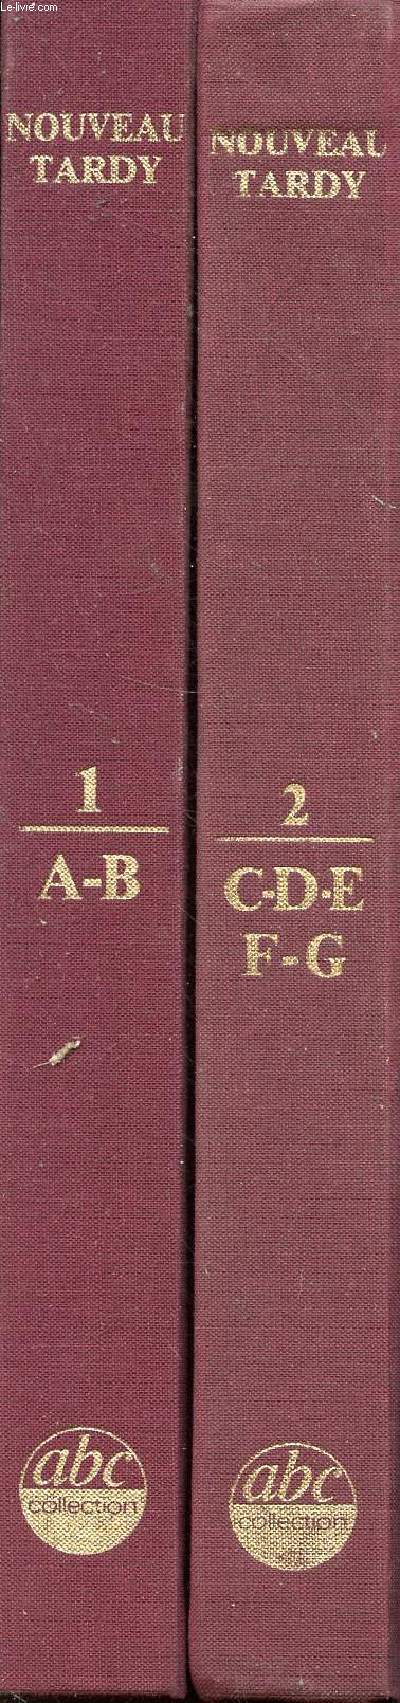 Nouveau Tardy - poteries, grs, faences en 2 tomes (tomes 1+2) - tome 1: A-B - tome 2: C-D-E-F-G - collection ABC